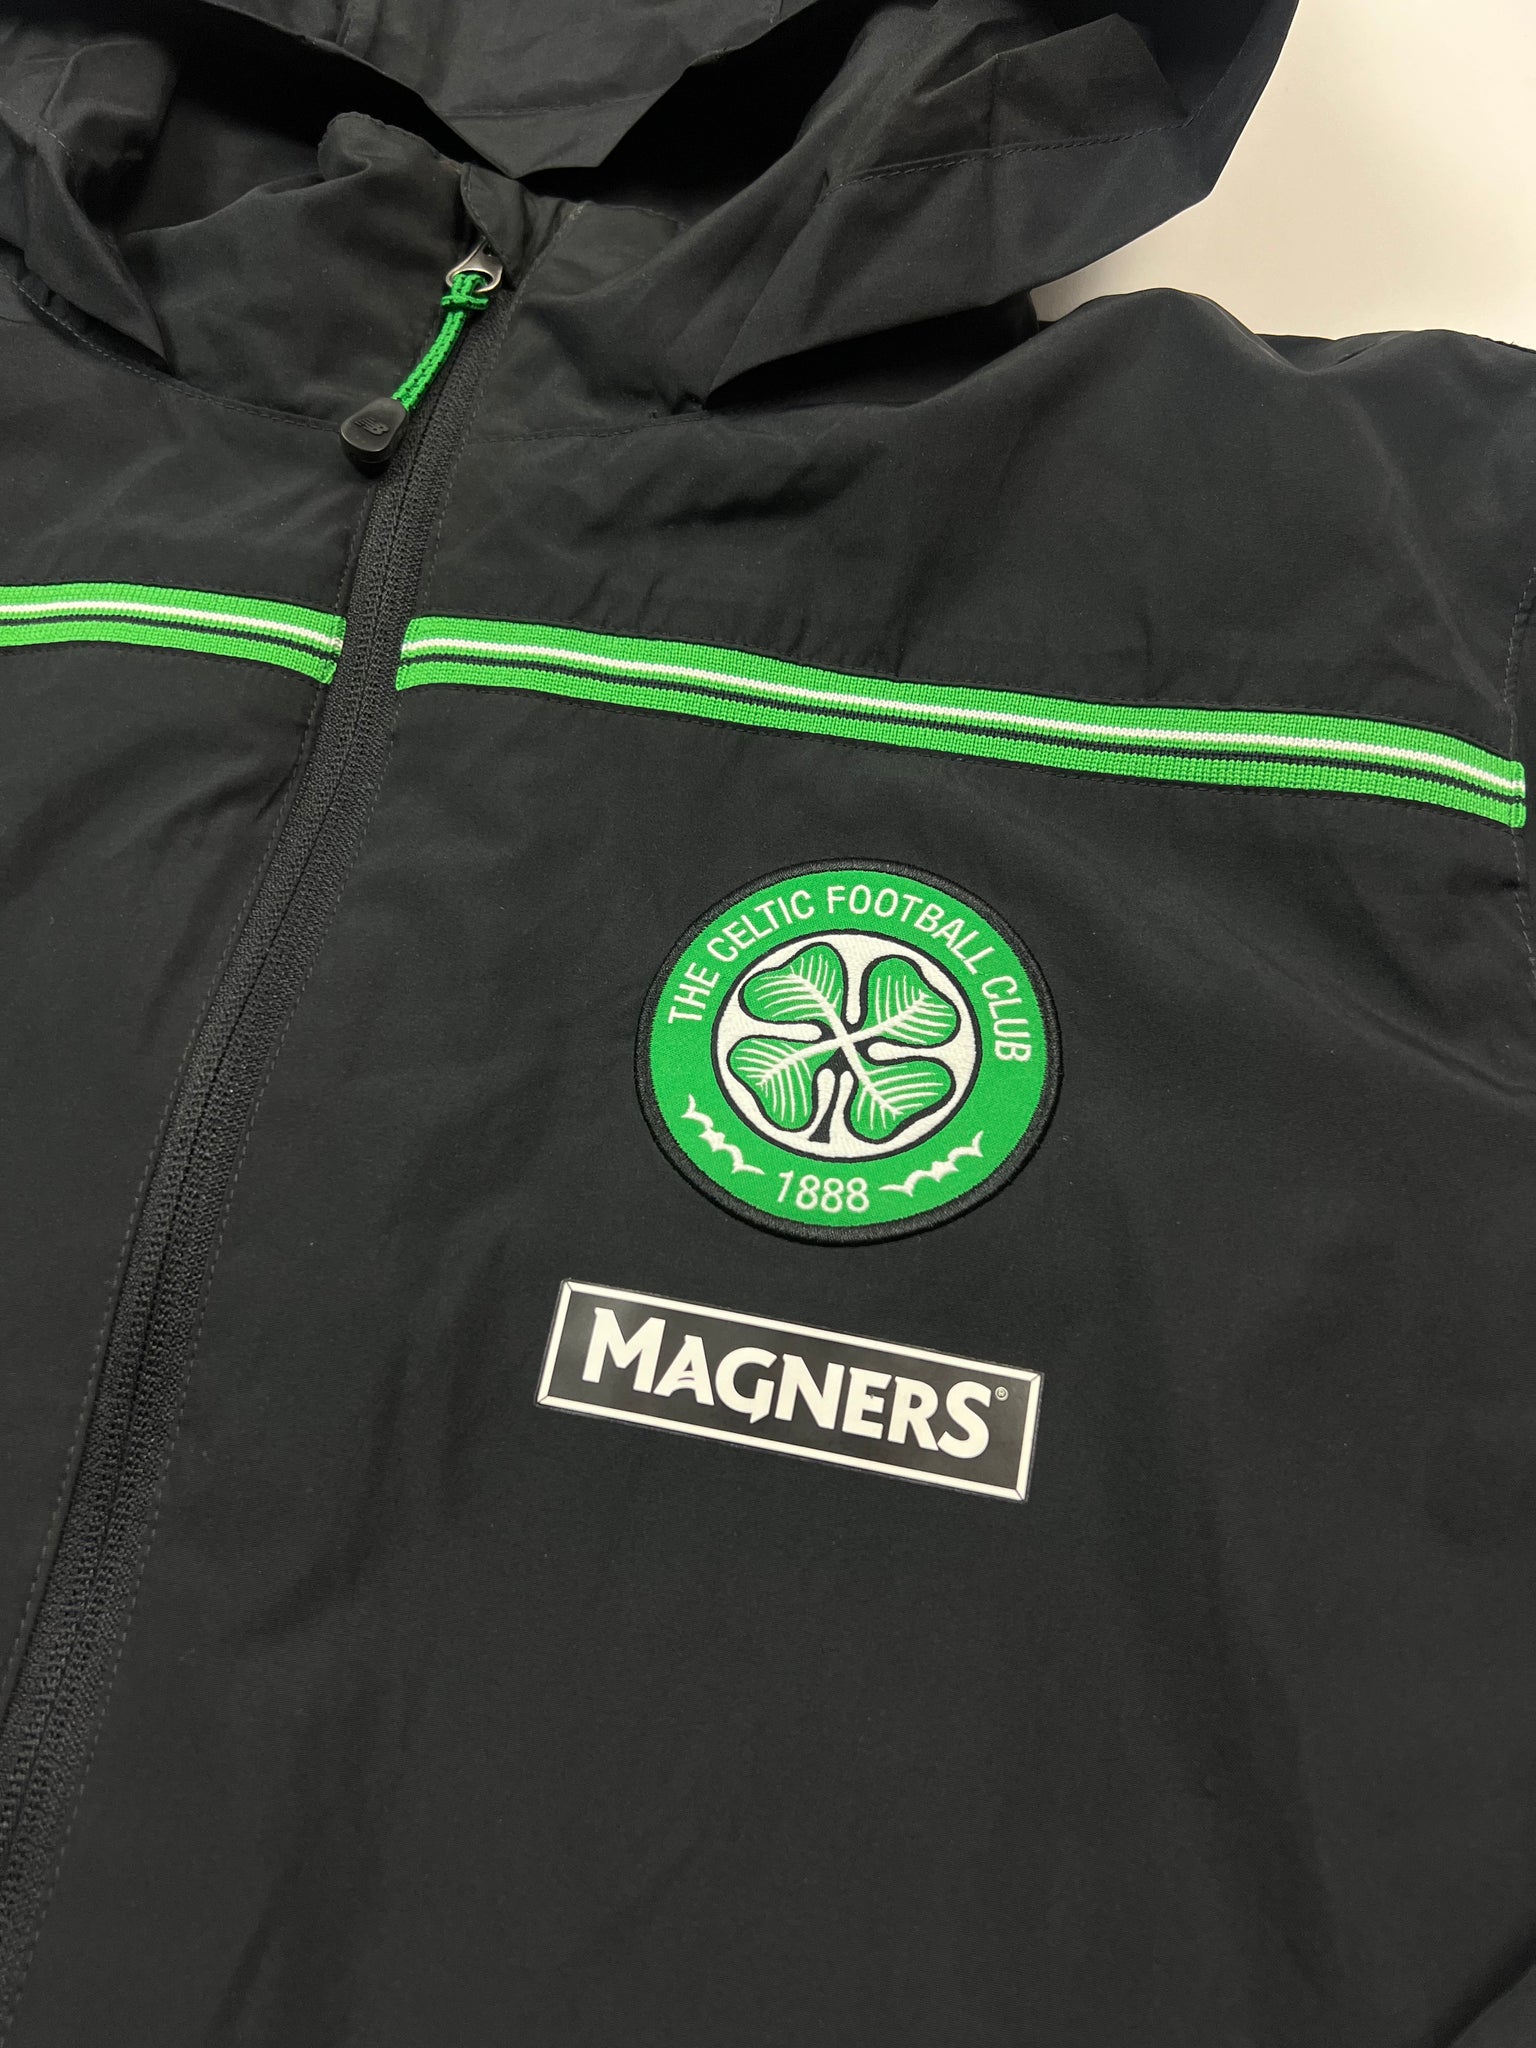 New Balance Celtics Glasgow Jacket (M)